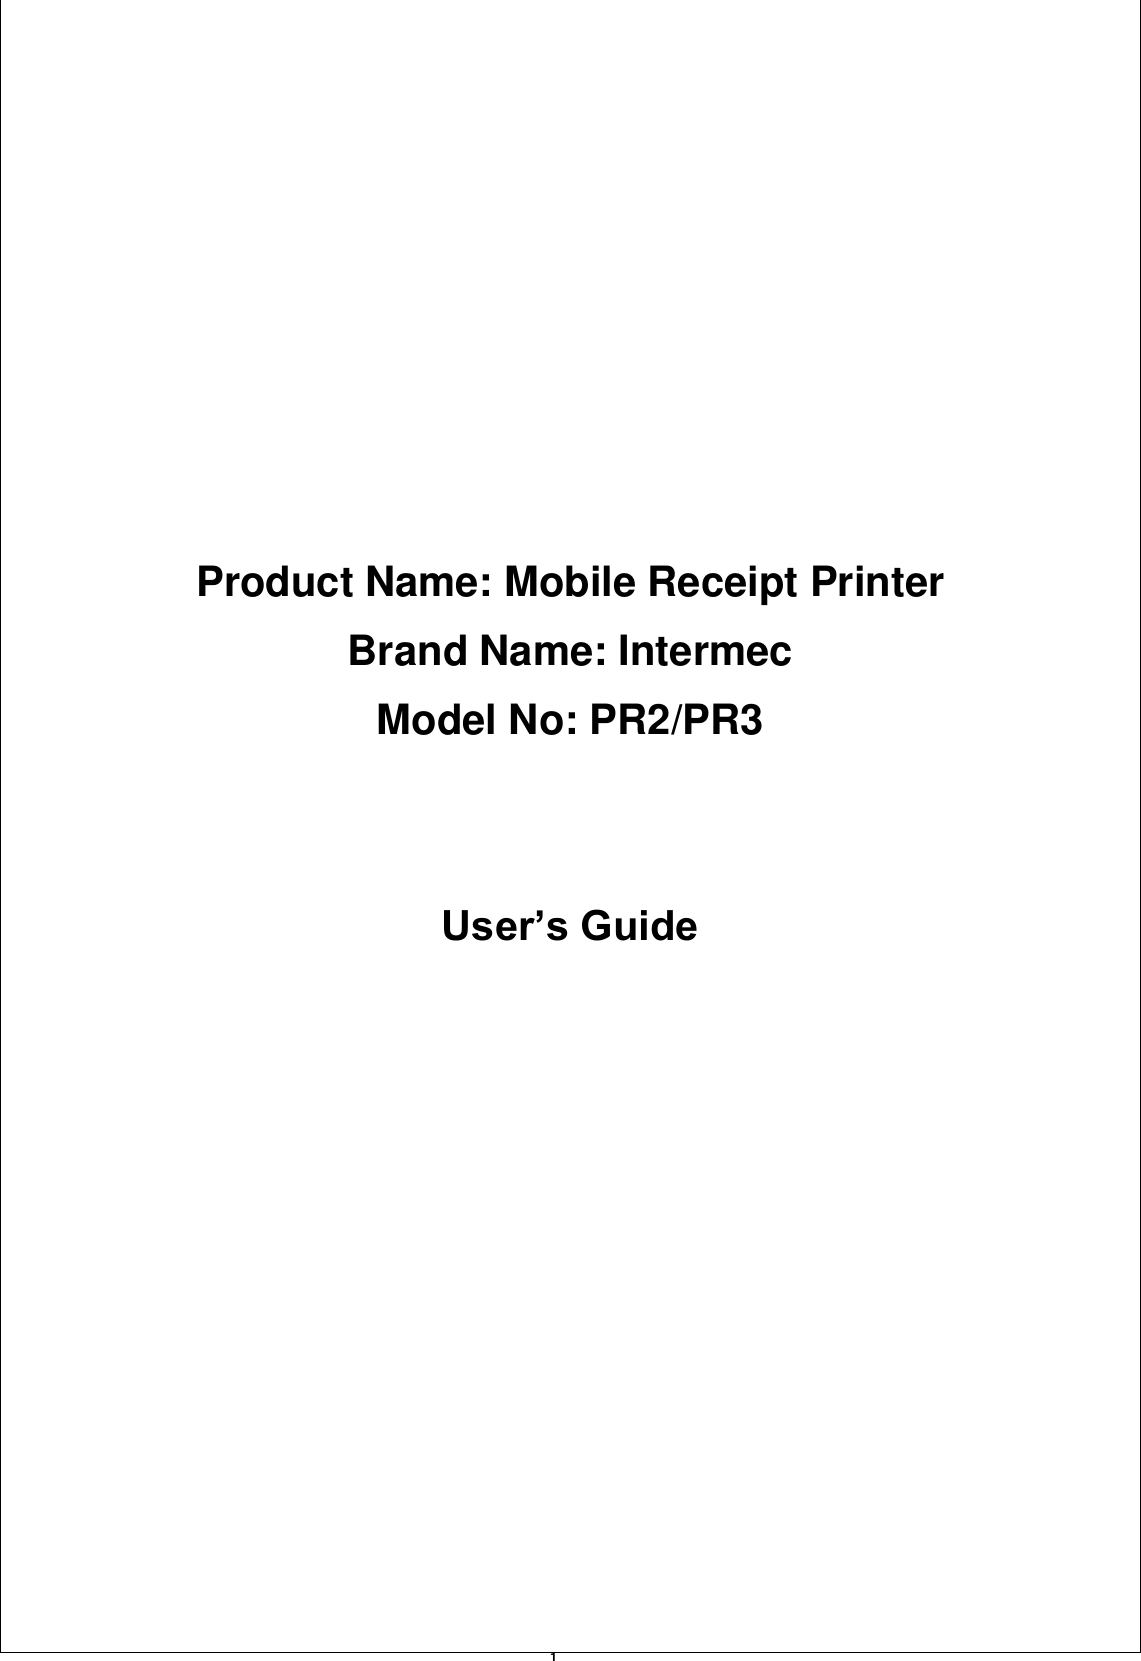   1                       Product Name: Mobile Receipt Printer Brand Name: Intermec Model No: PR2/PR3   User’s Guide     